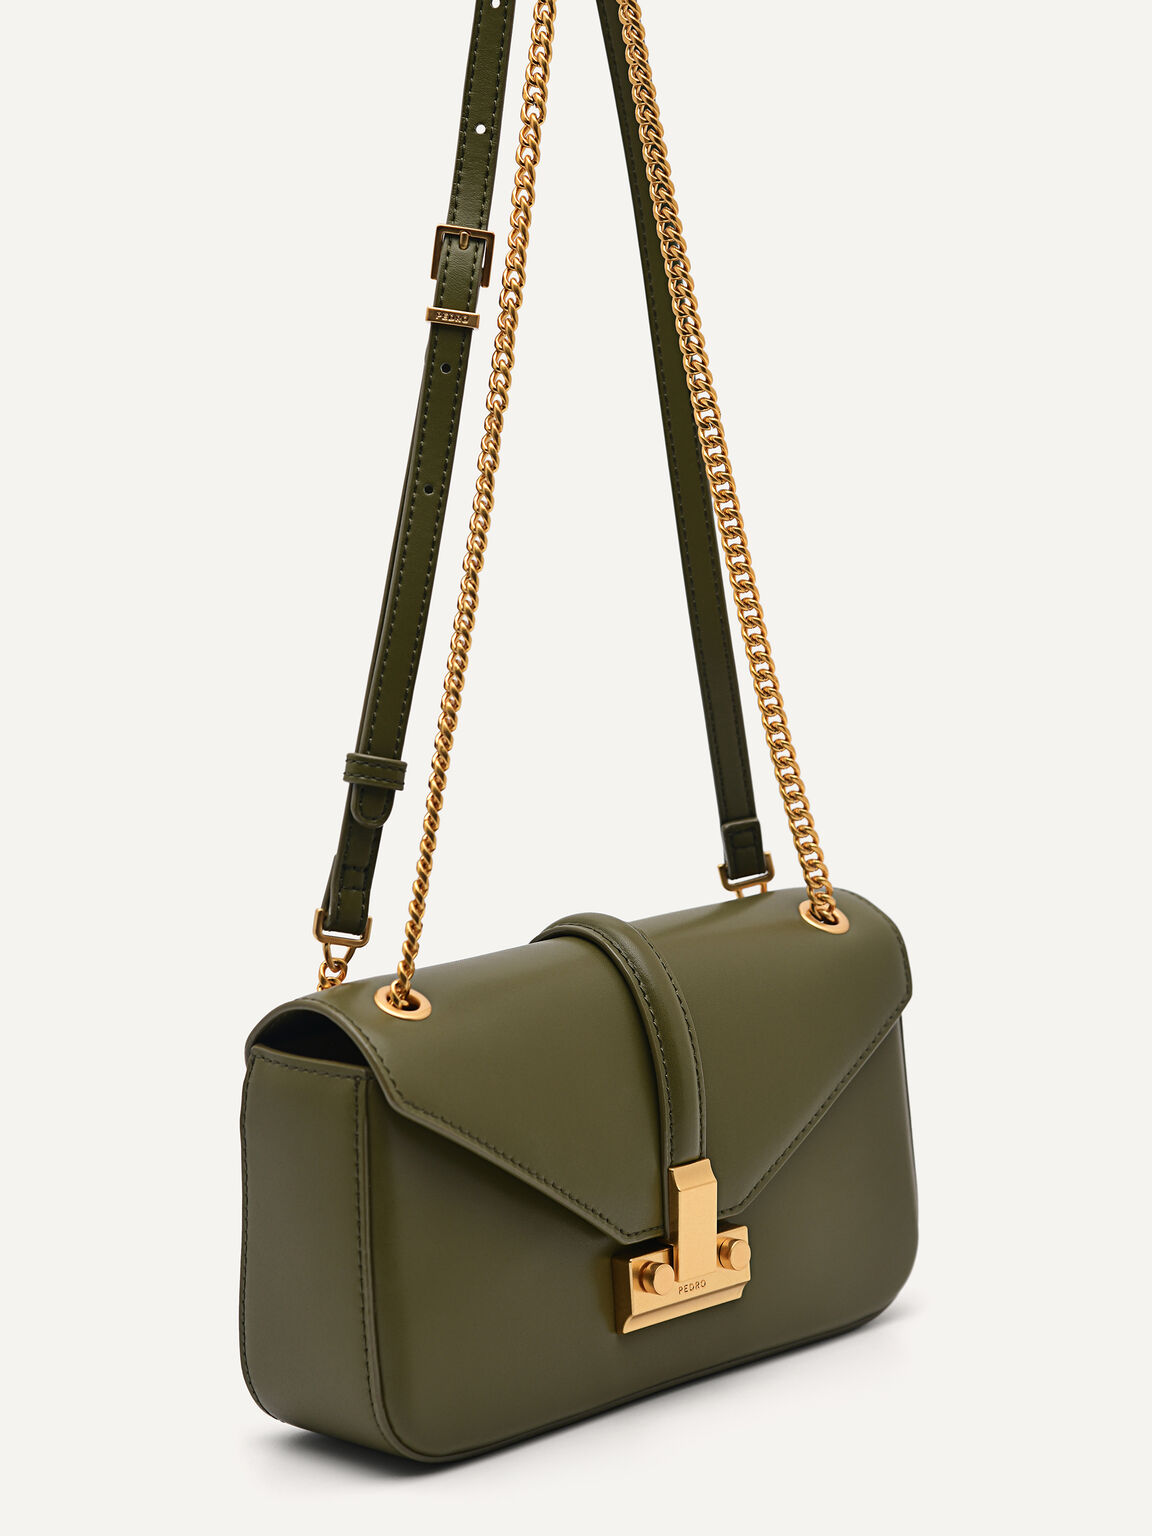 PEDRO Studio Francoise Leather Shoulder Bag, Military Green